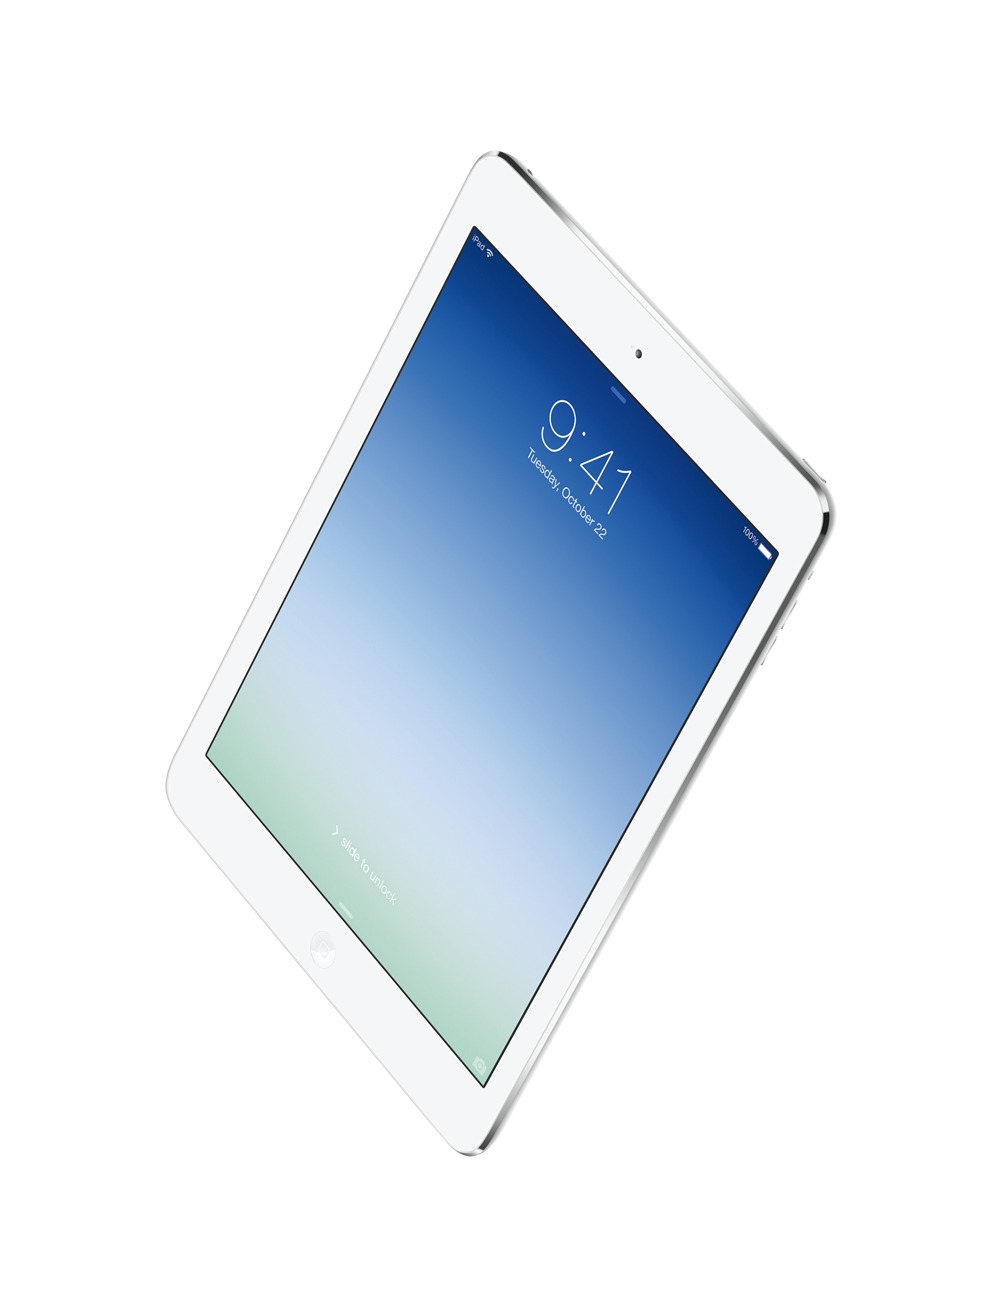 【iPad Air】Apple.com/jp で SIM フリー版「iPad Air（Wi-Fi + Cellular）」の取り扱いを開始